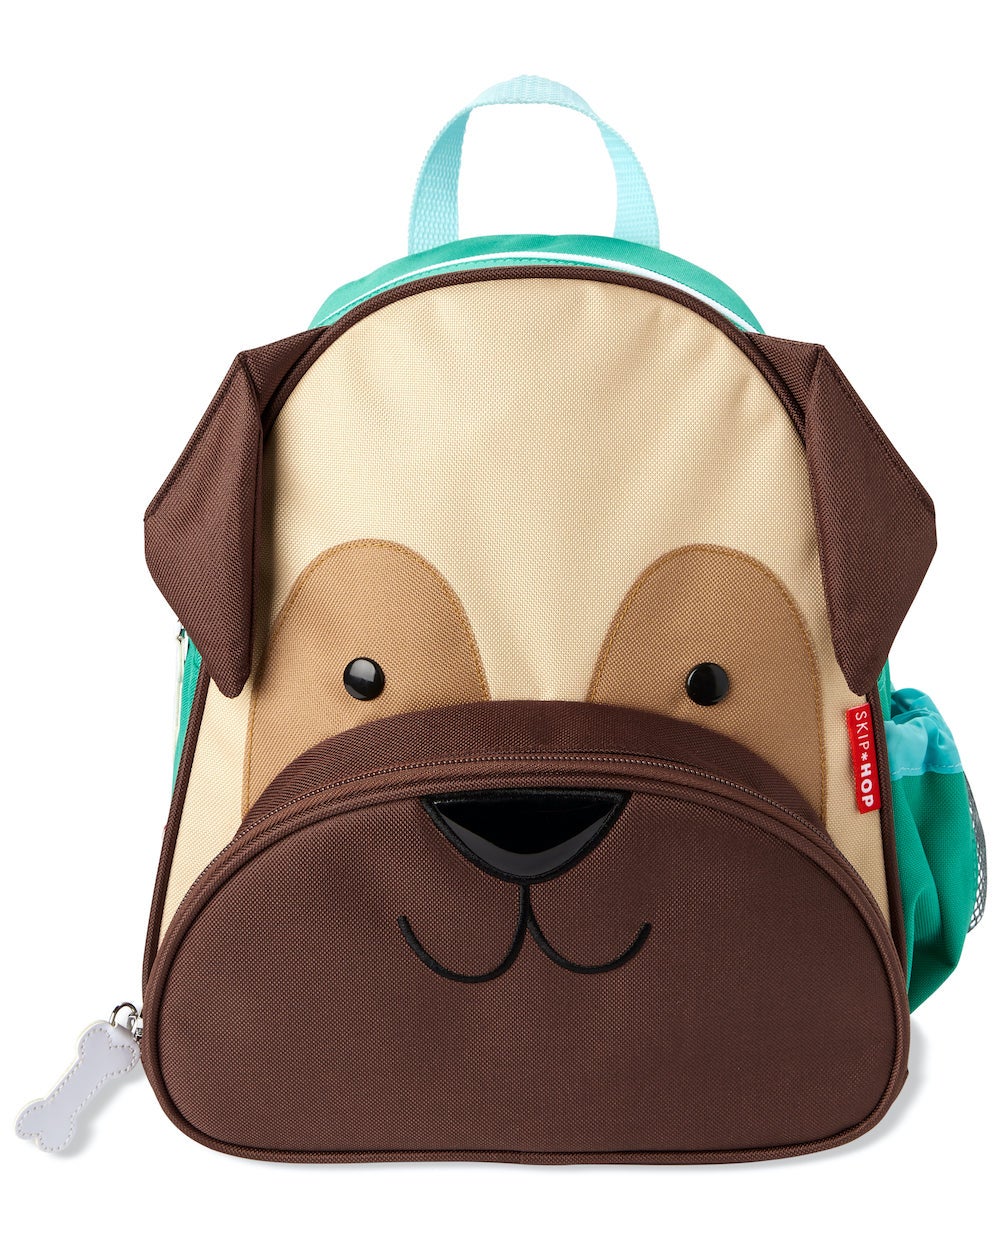 Skip Hop Zoo Little Kid Backpack - Preston Pug